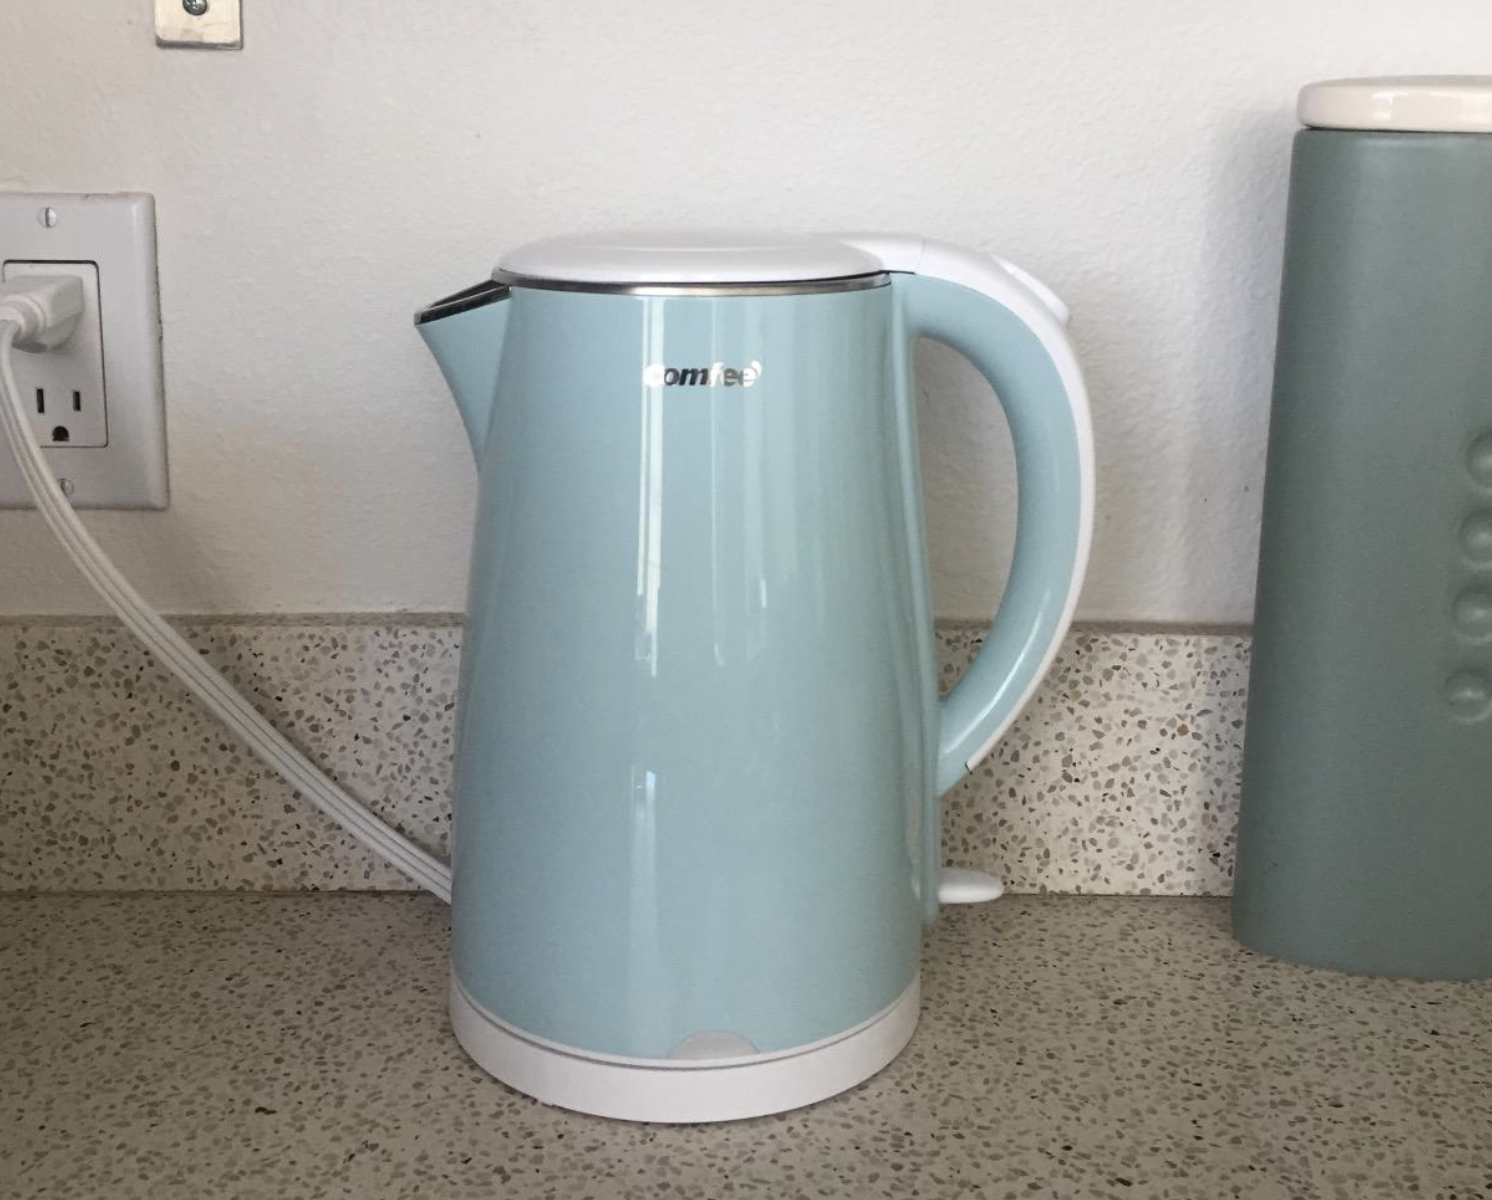 Mint green tea kettle on a kitchen counter